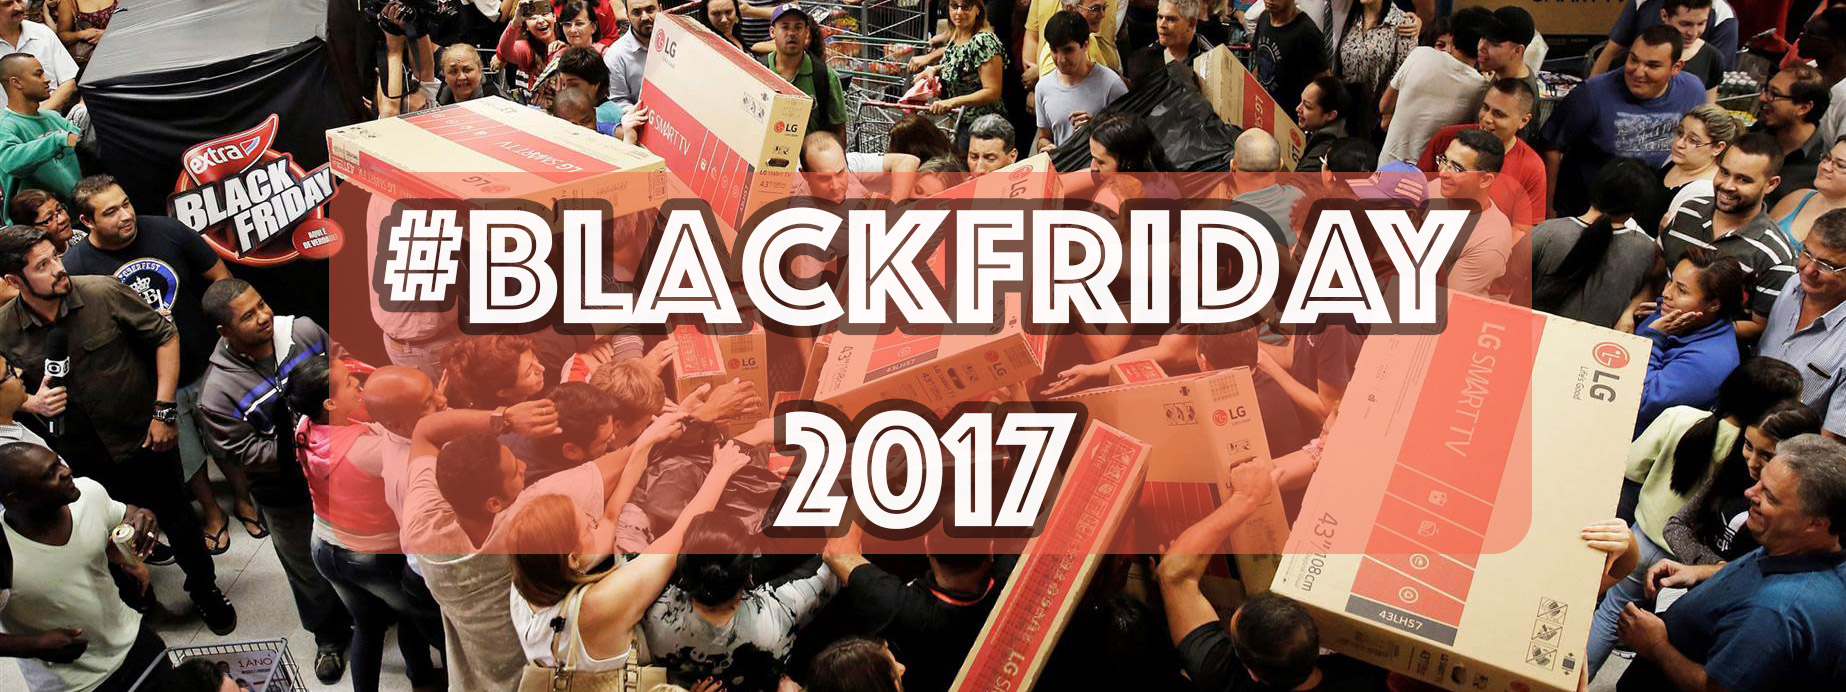 Tổng hợp deal giảm giá Black Friday 2017 từ Lazada, Tiki, Adayroi